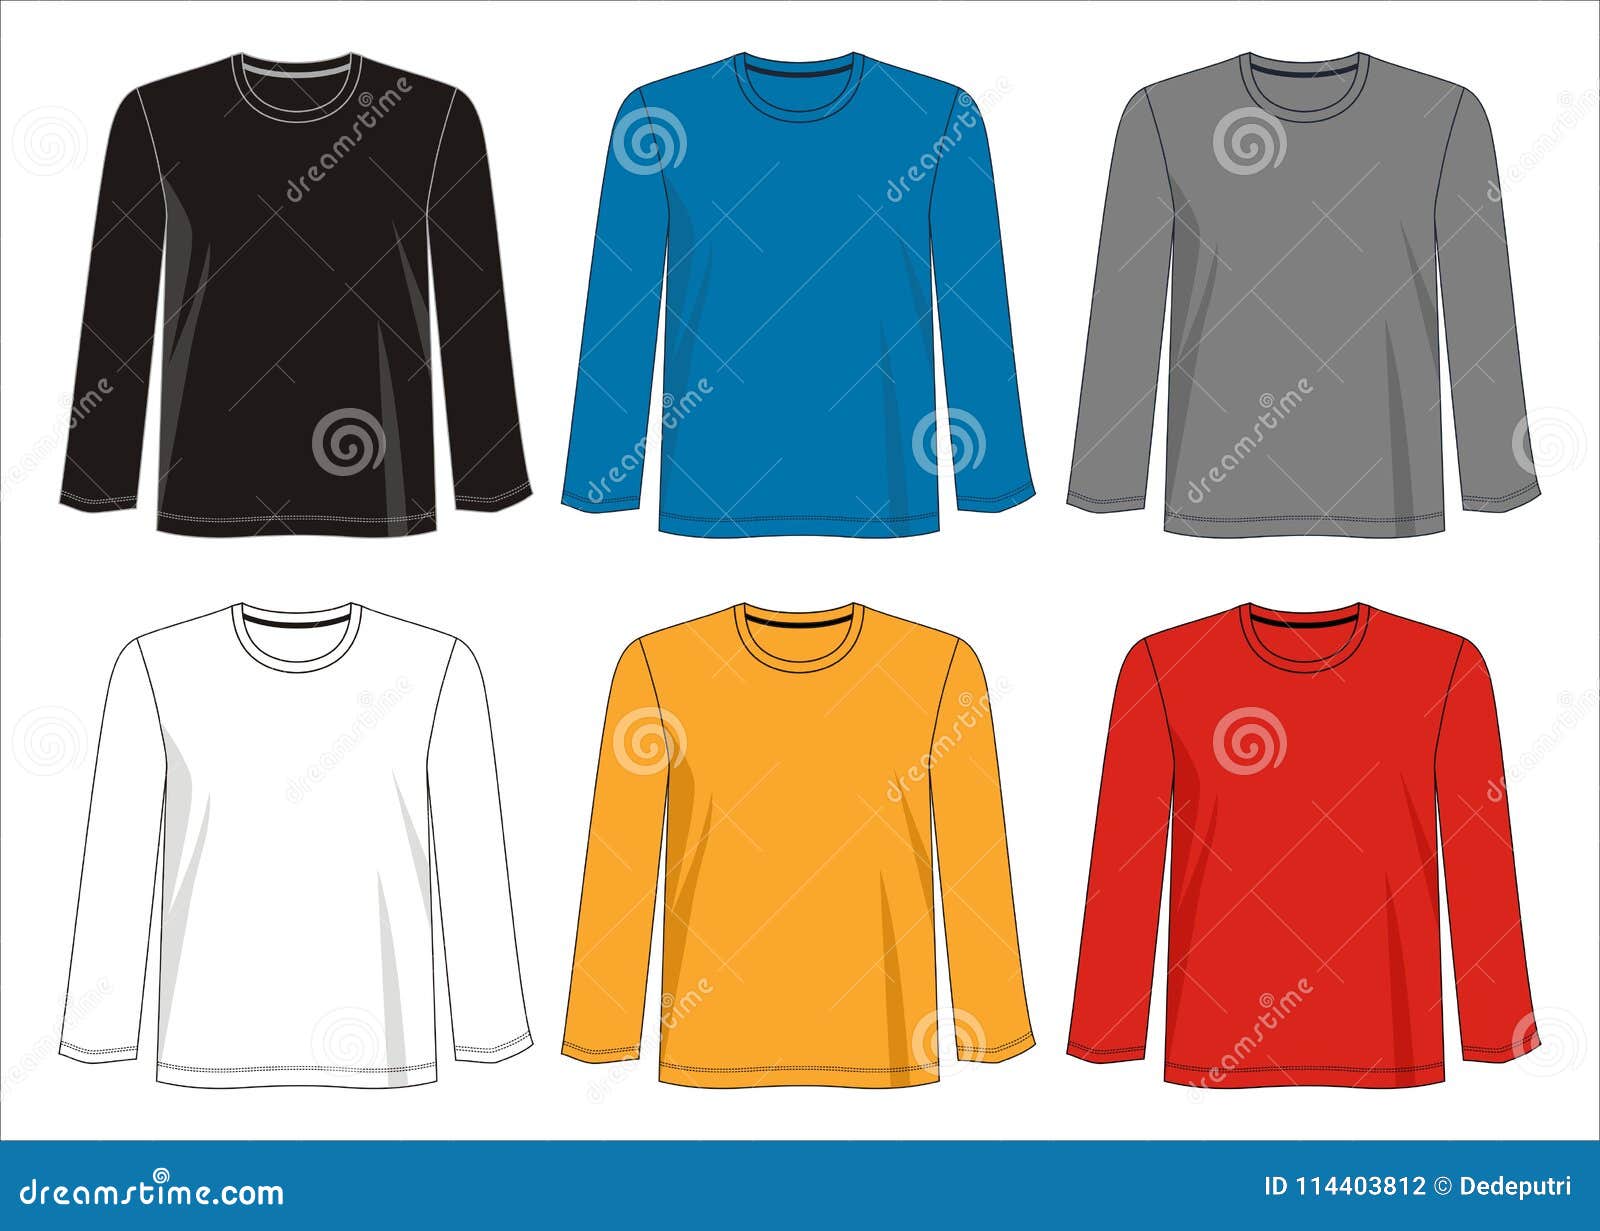 Design Vector T Shirt Template Collection for Men 02 Stock Vector ...